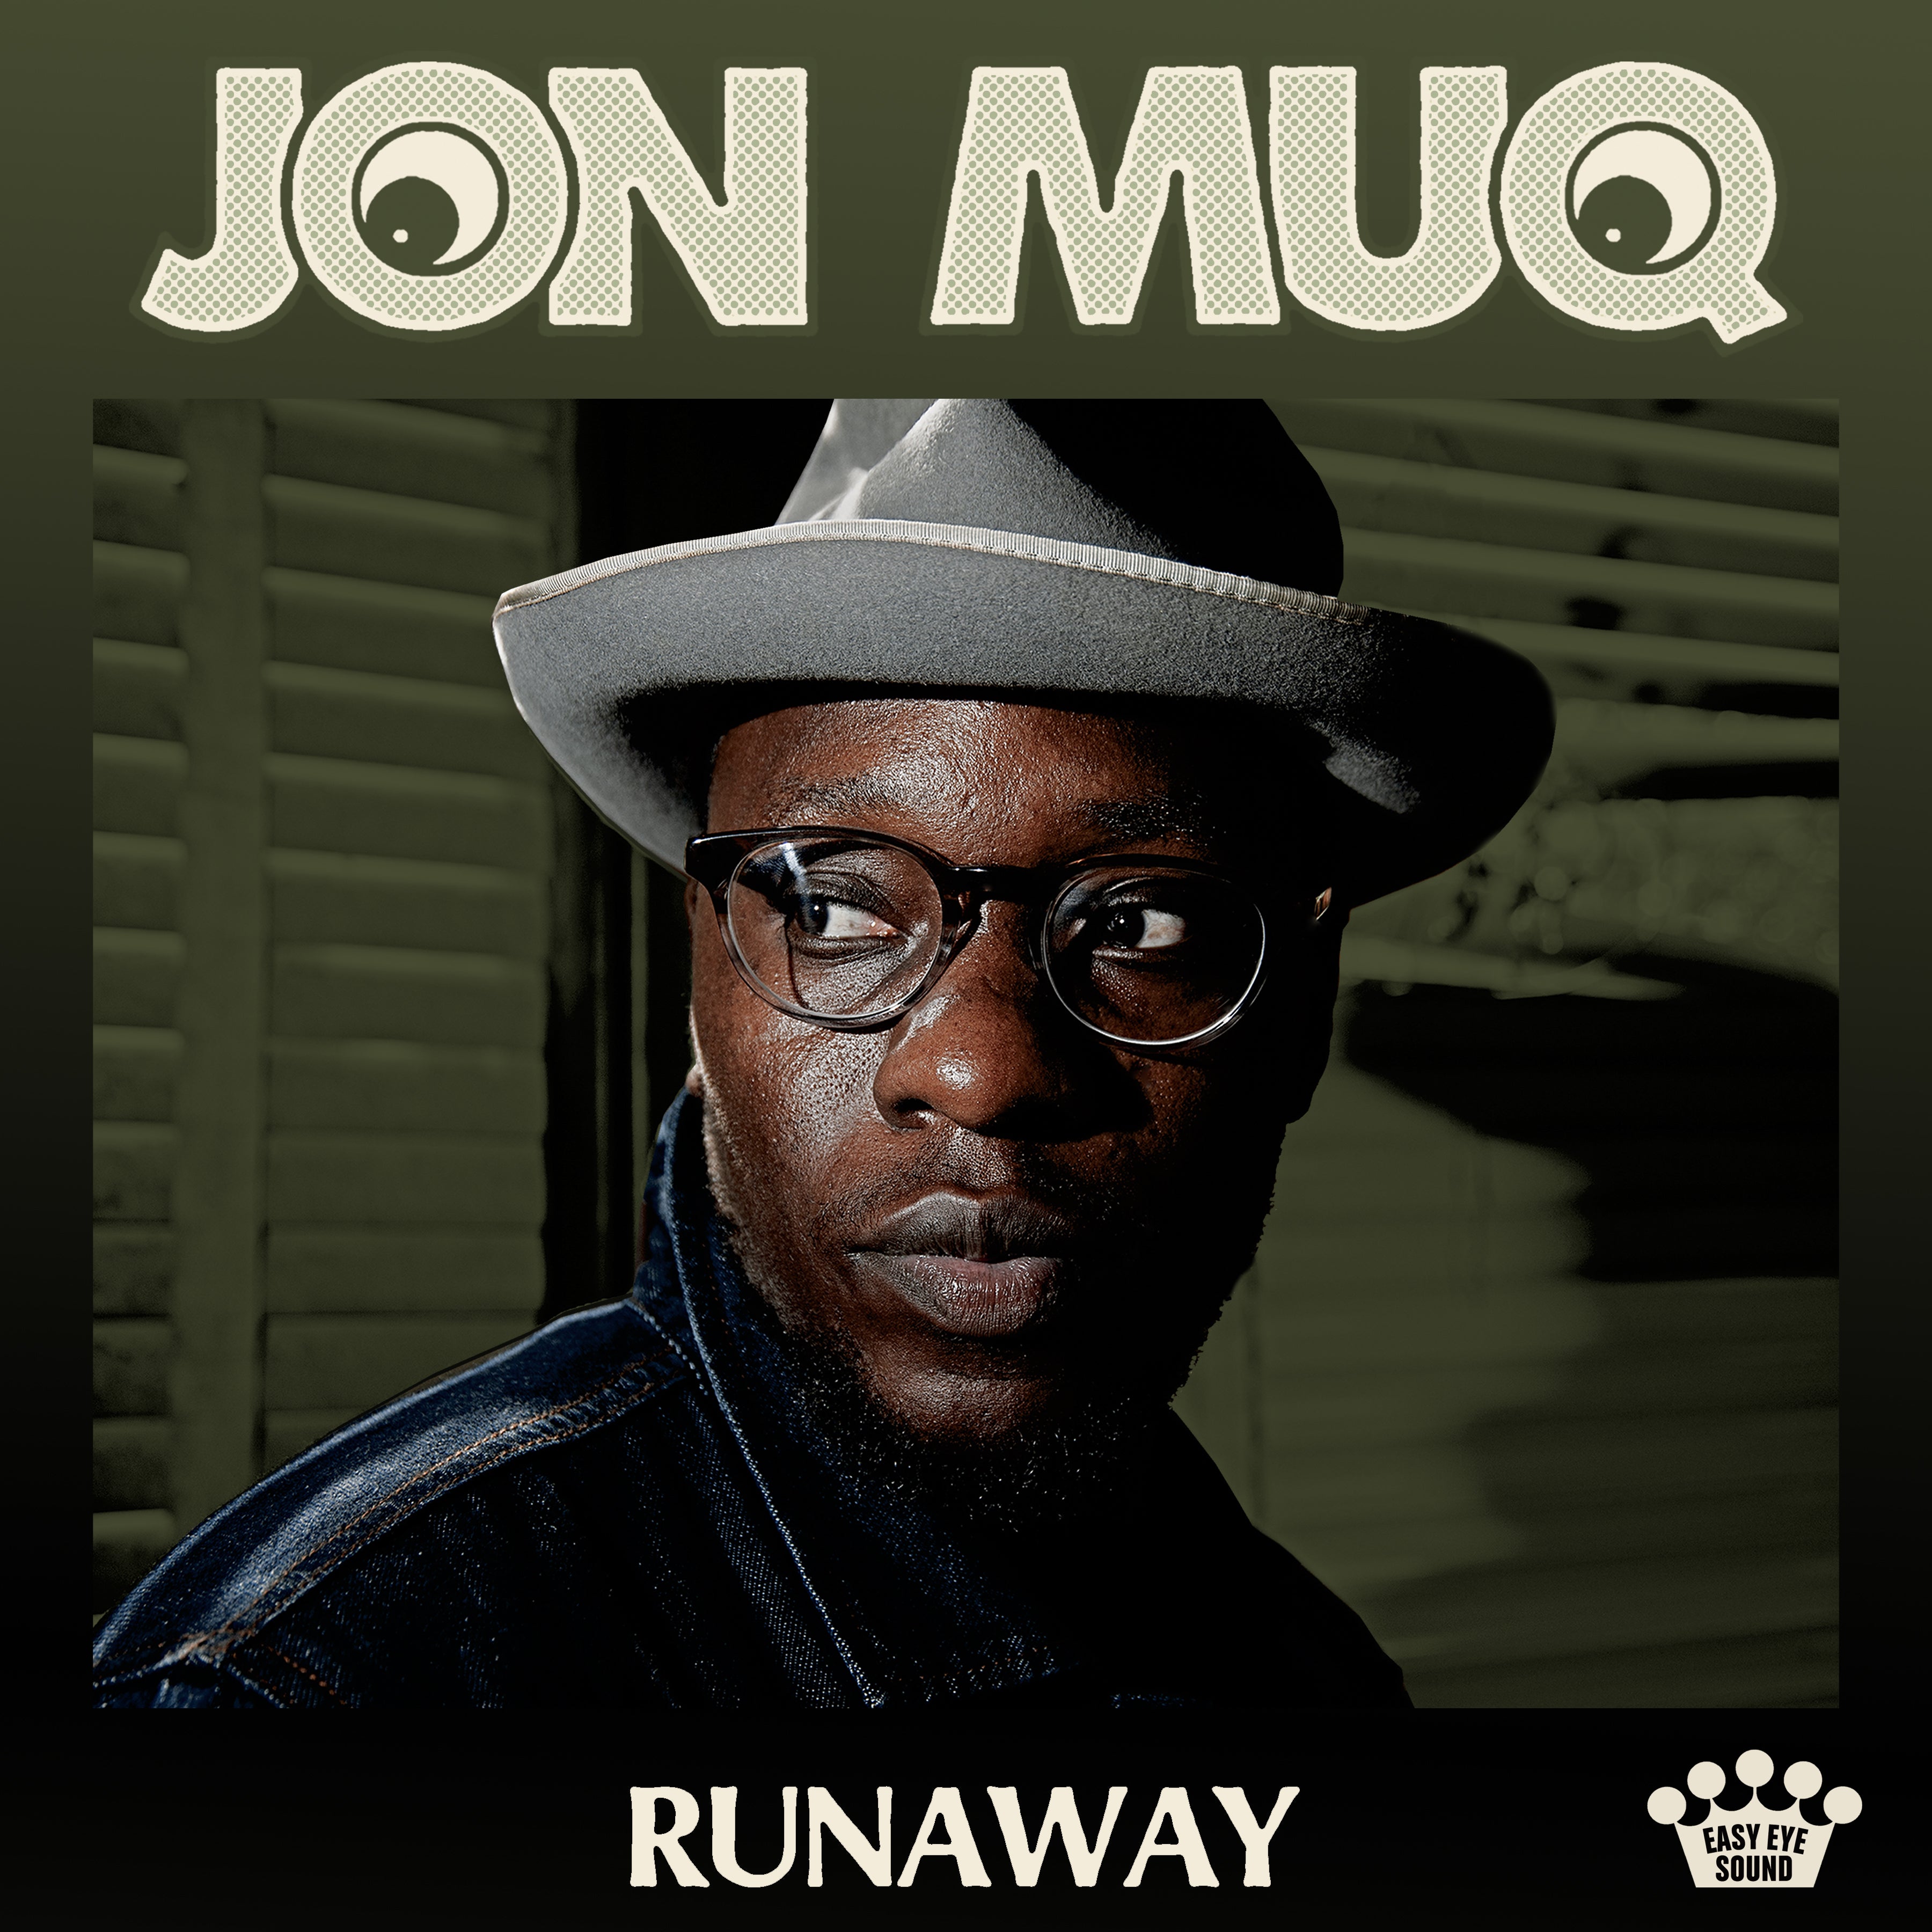 Jon Muq makes his Easy Eye Sound debut with "Runaway"